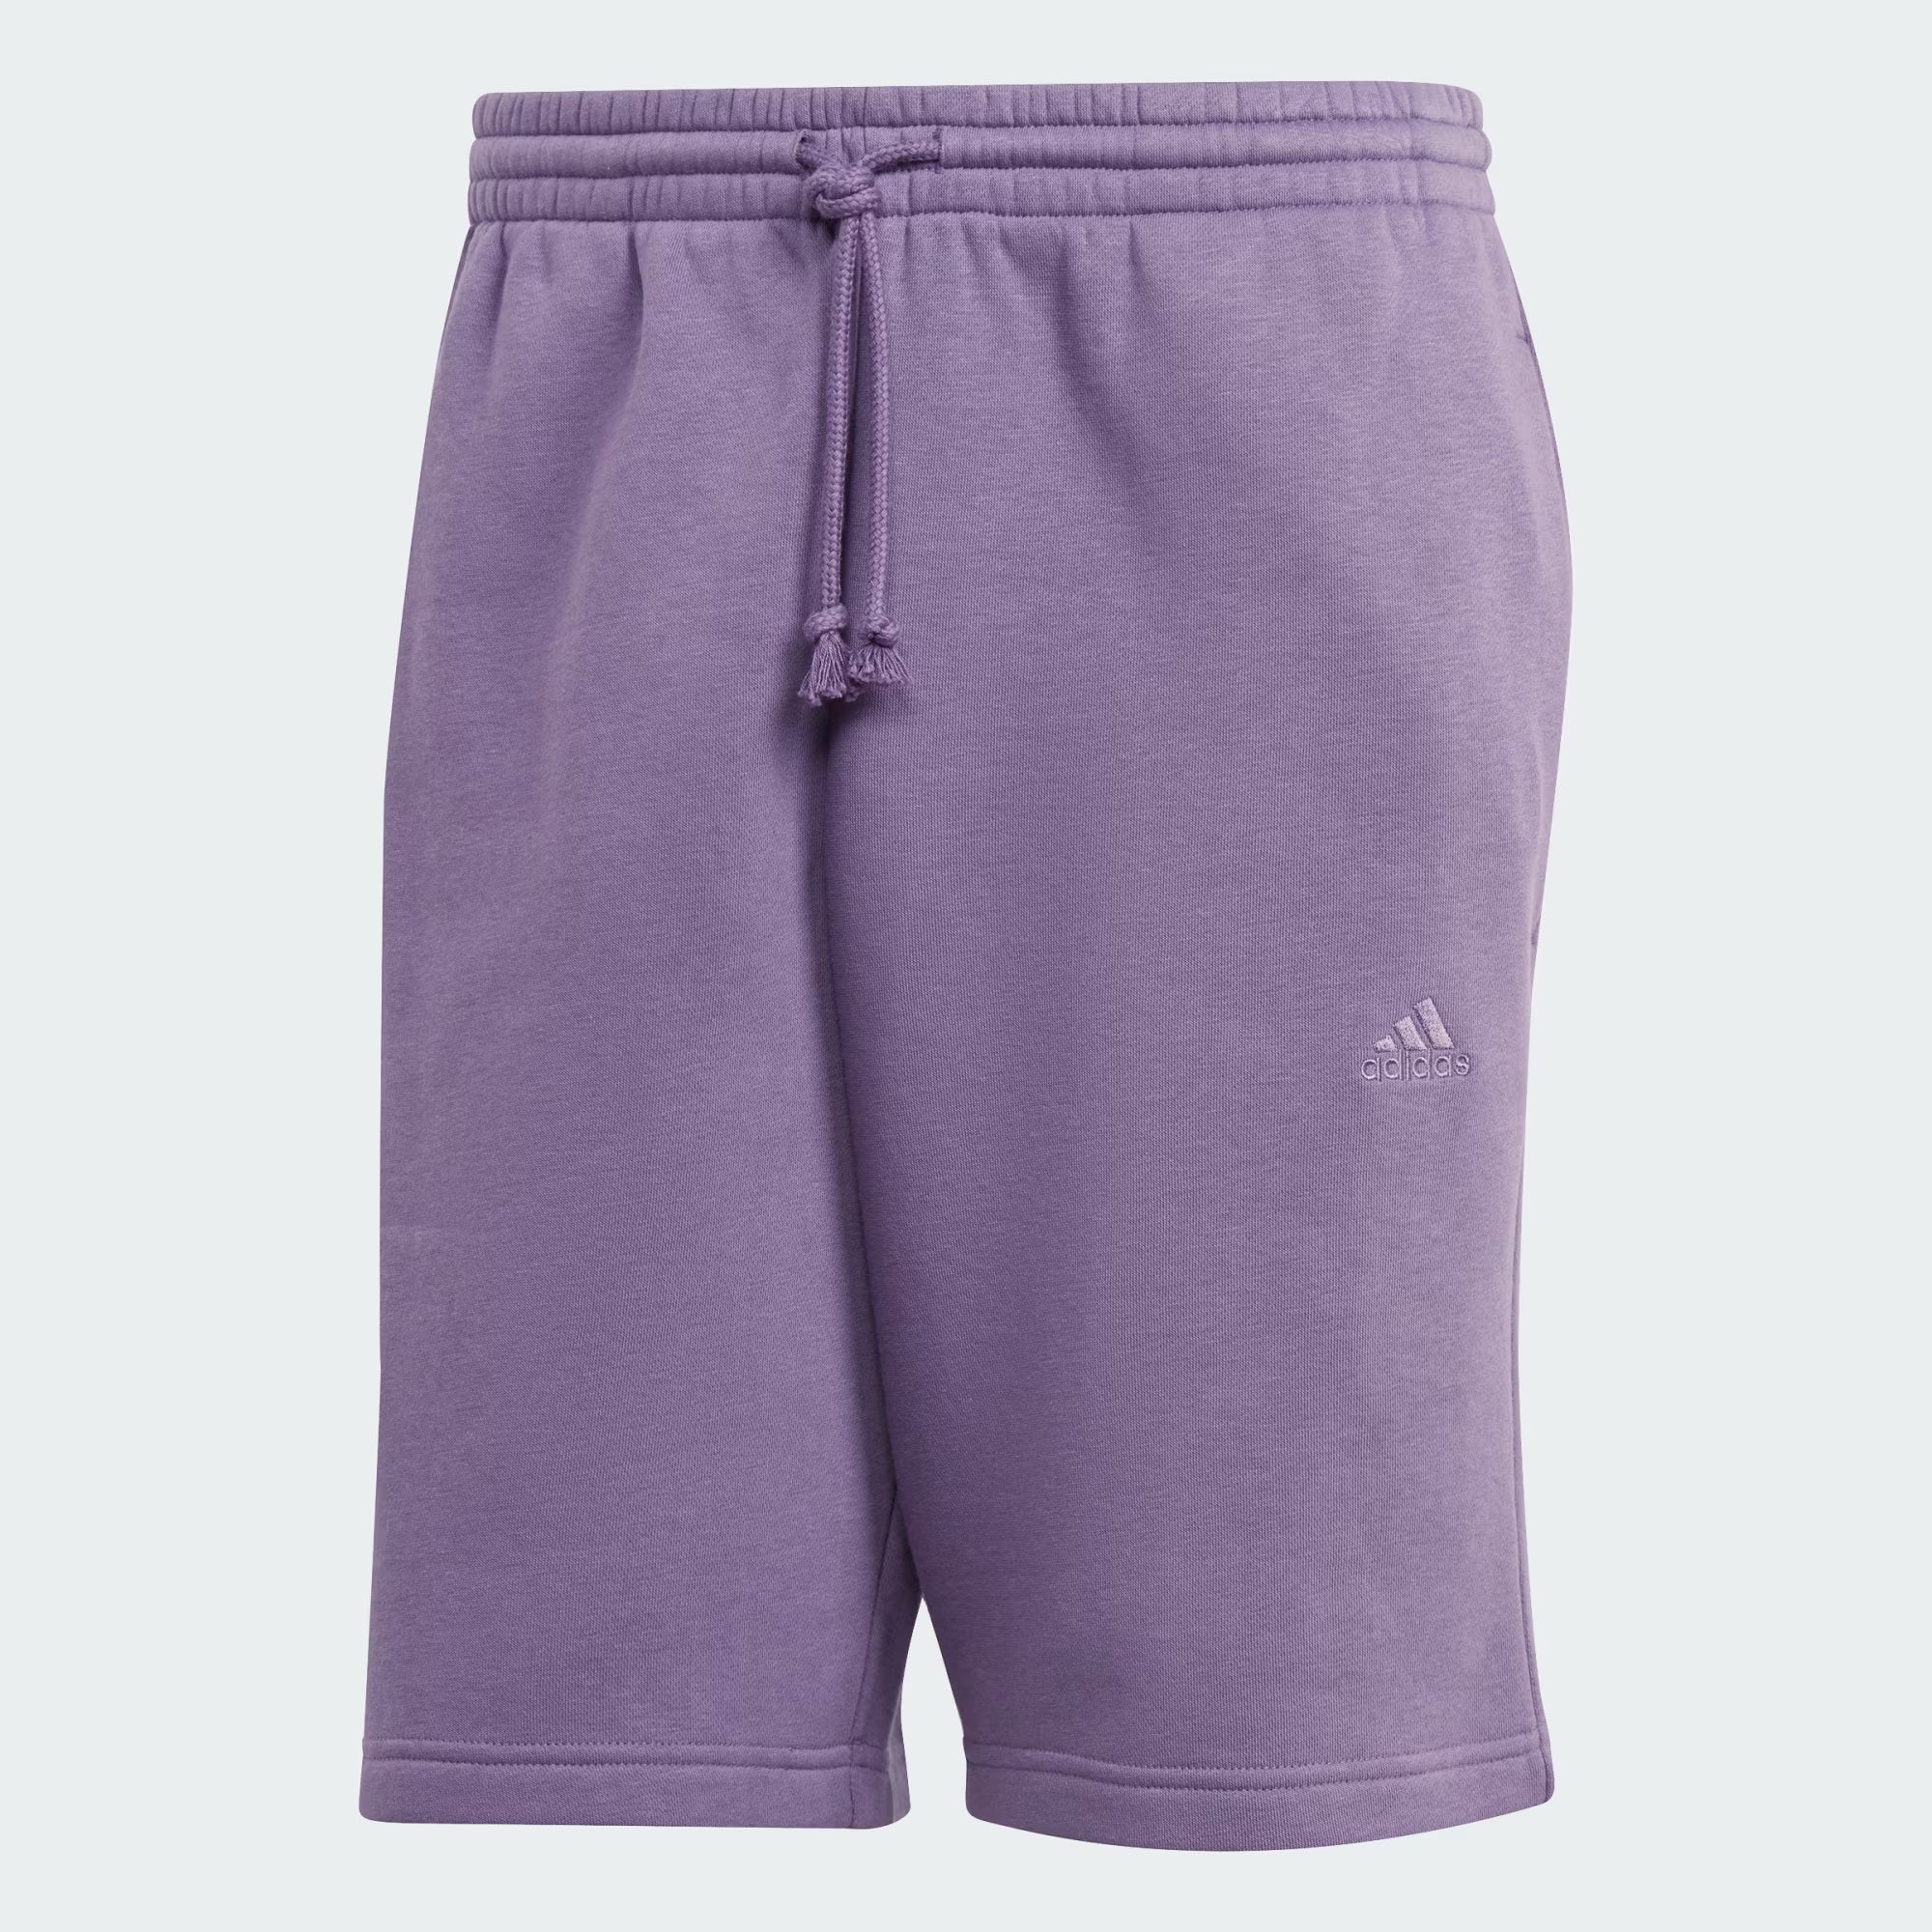 Adidas All SZN Fleece Shorts - Men